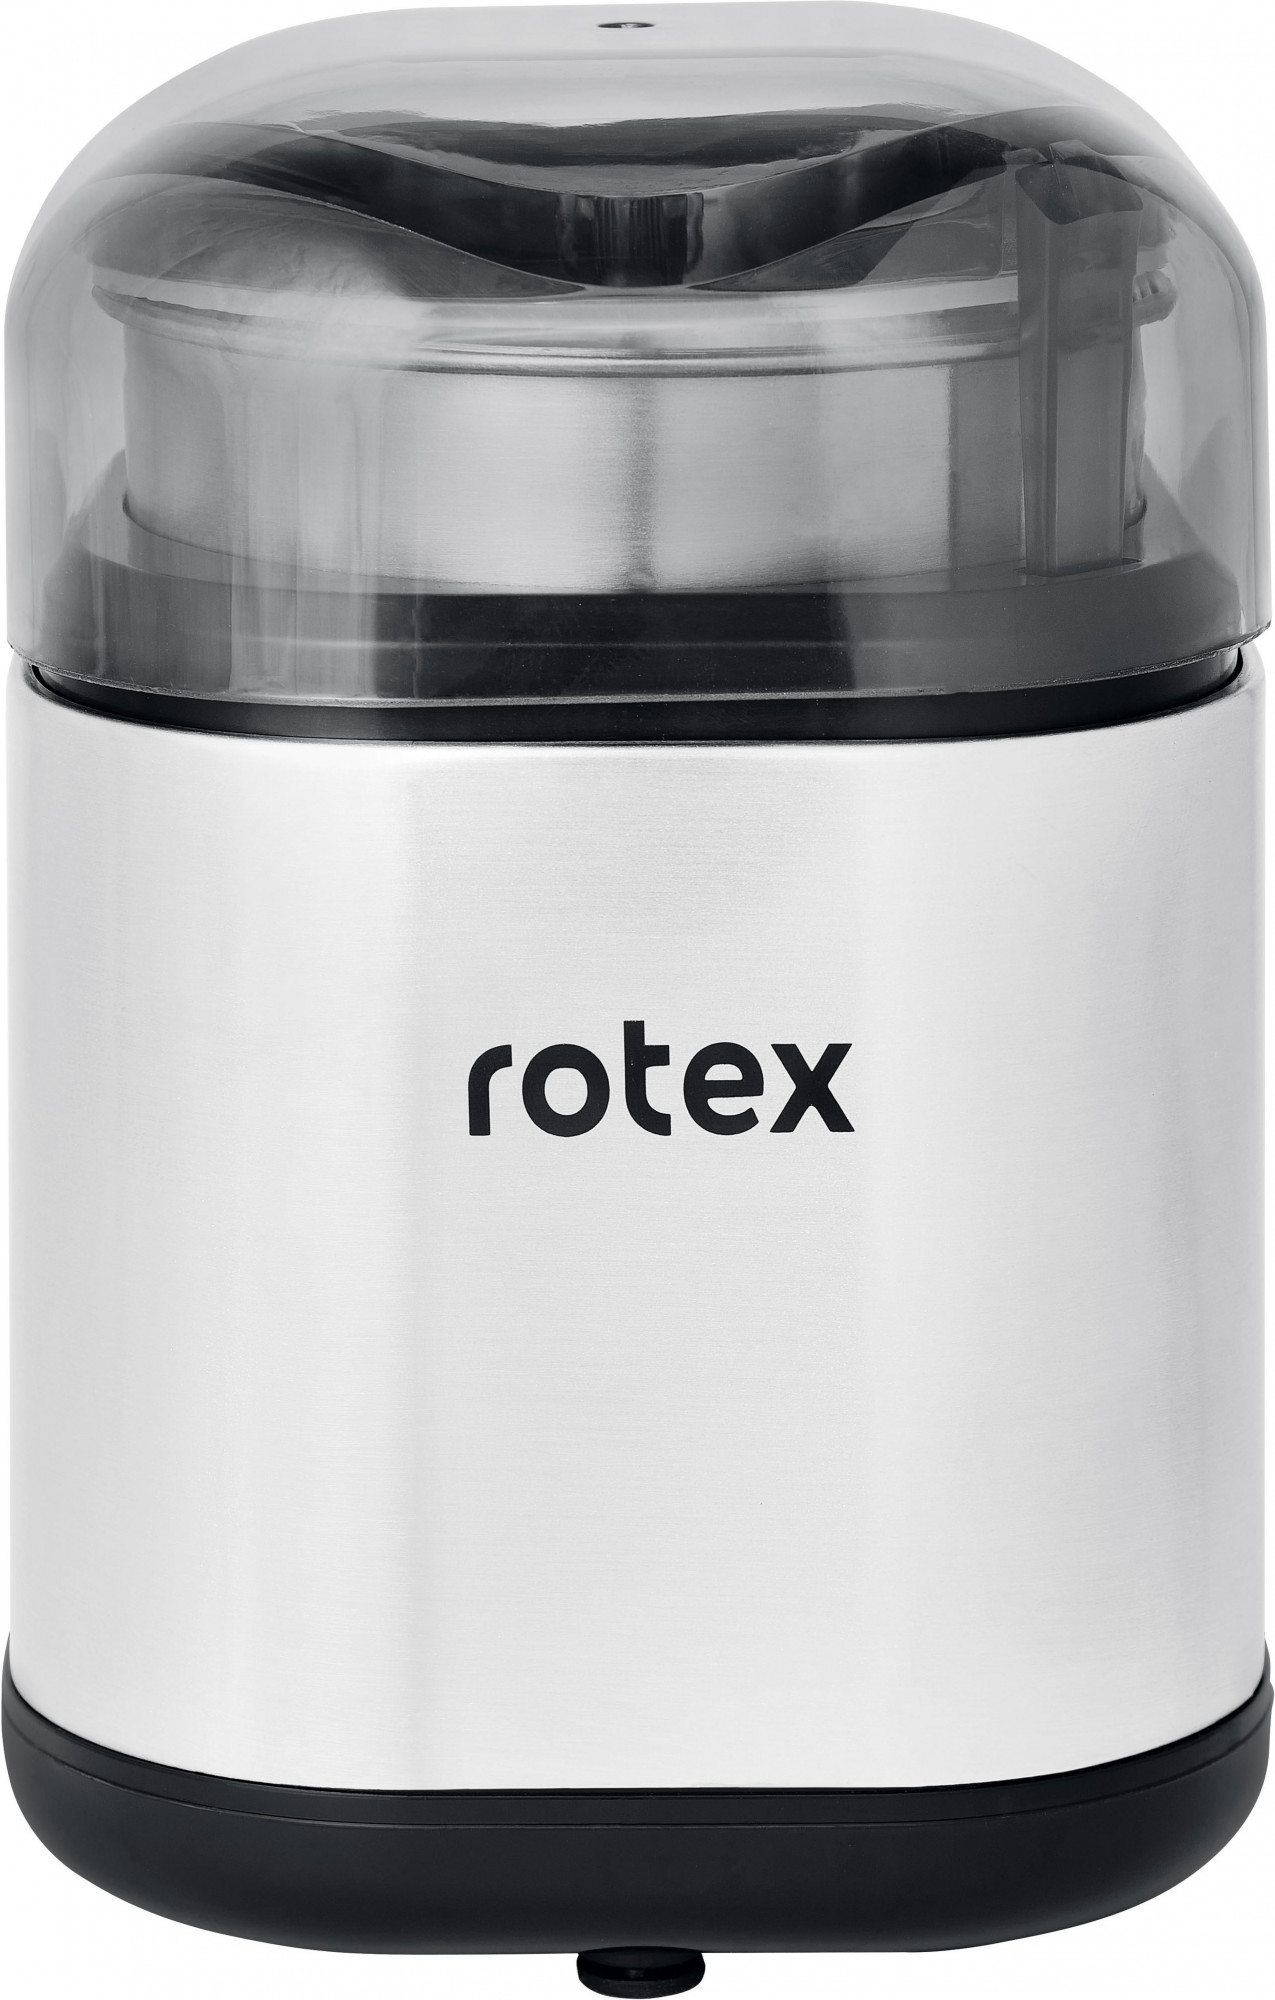 Rotex RCG250-S - зображення 1